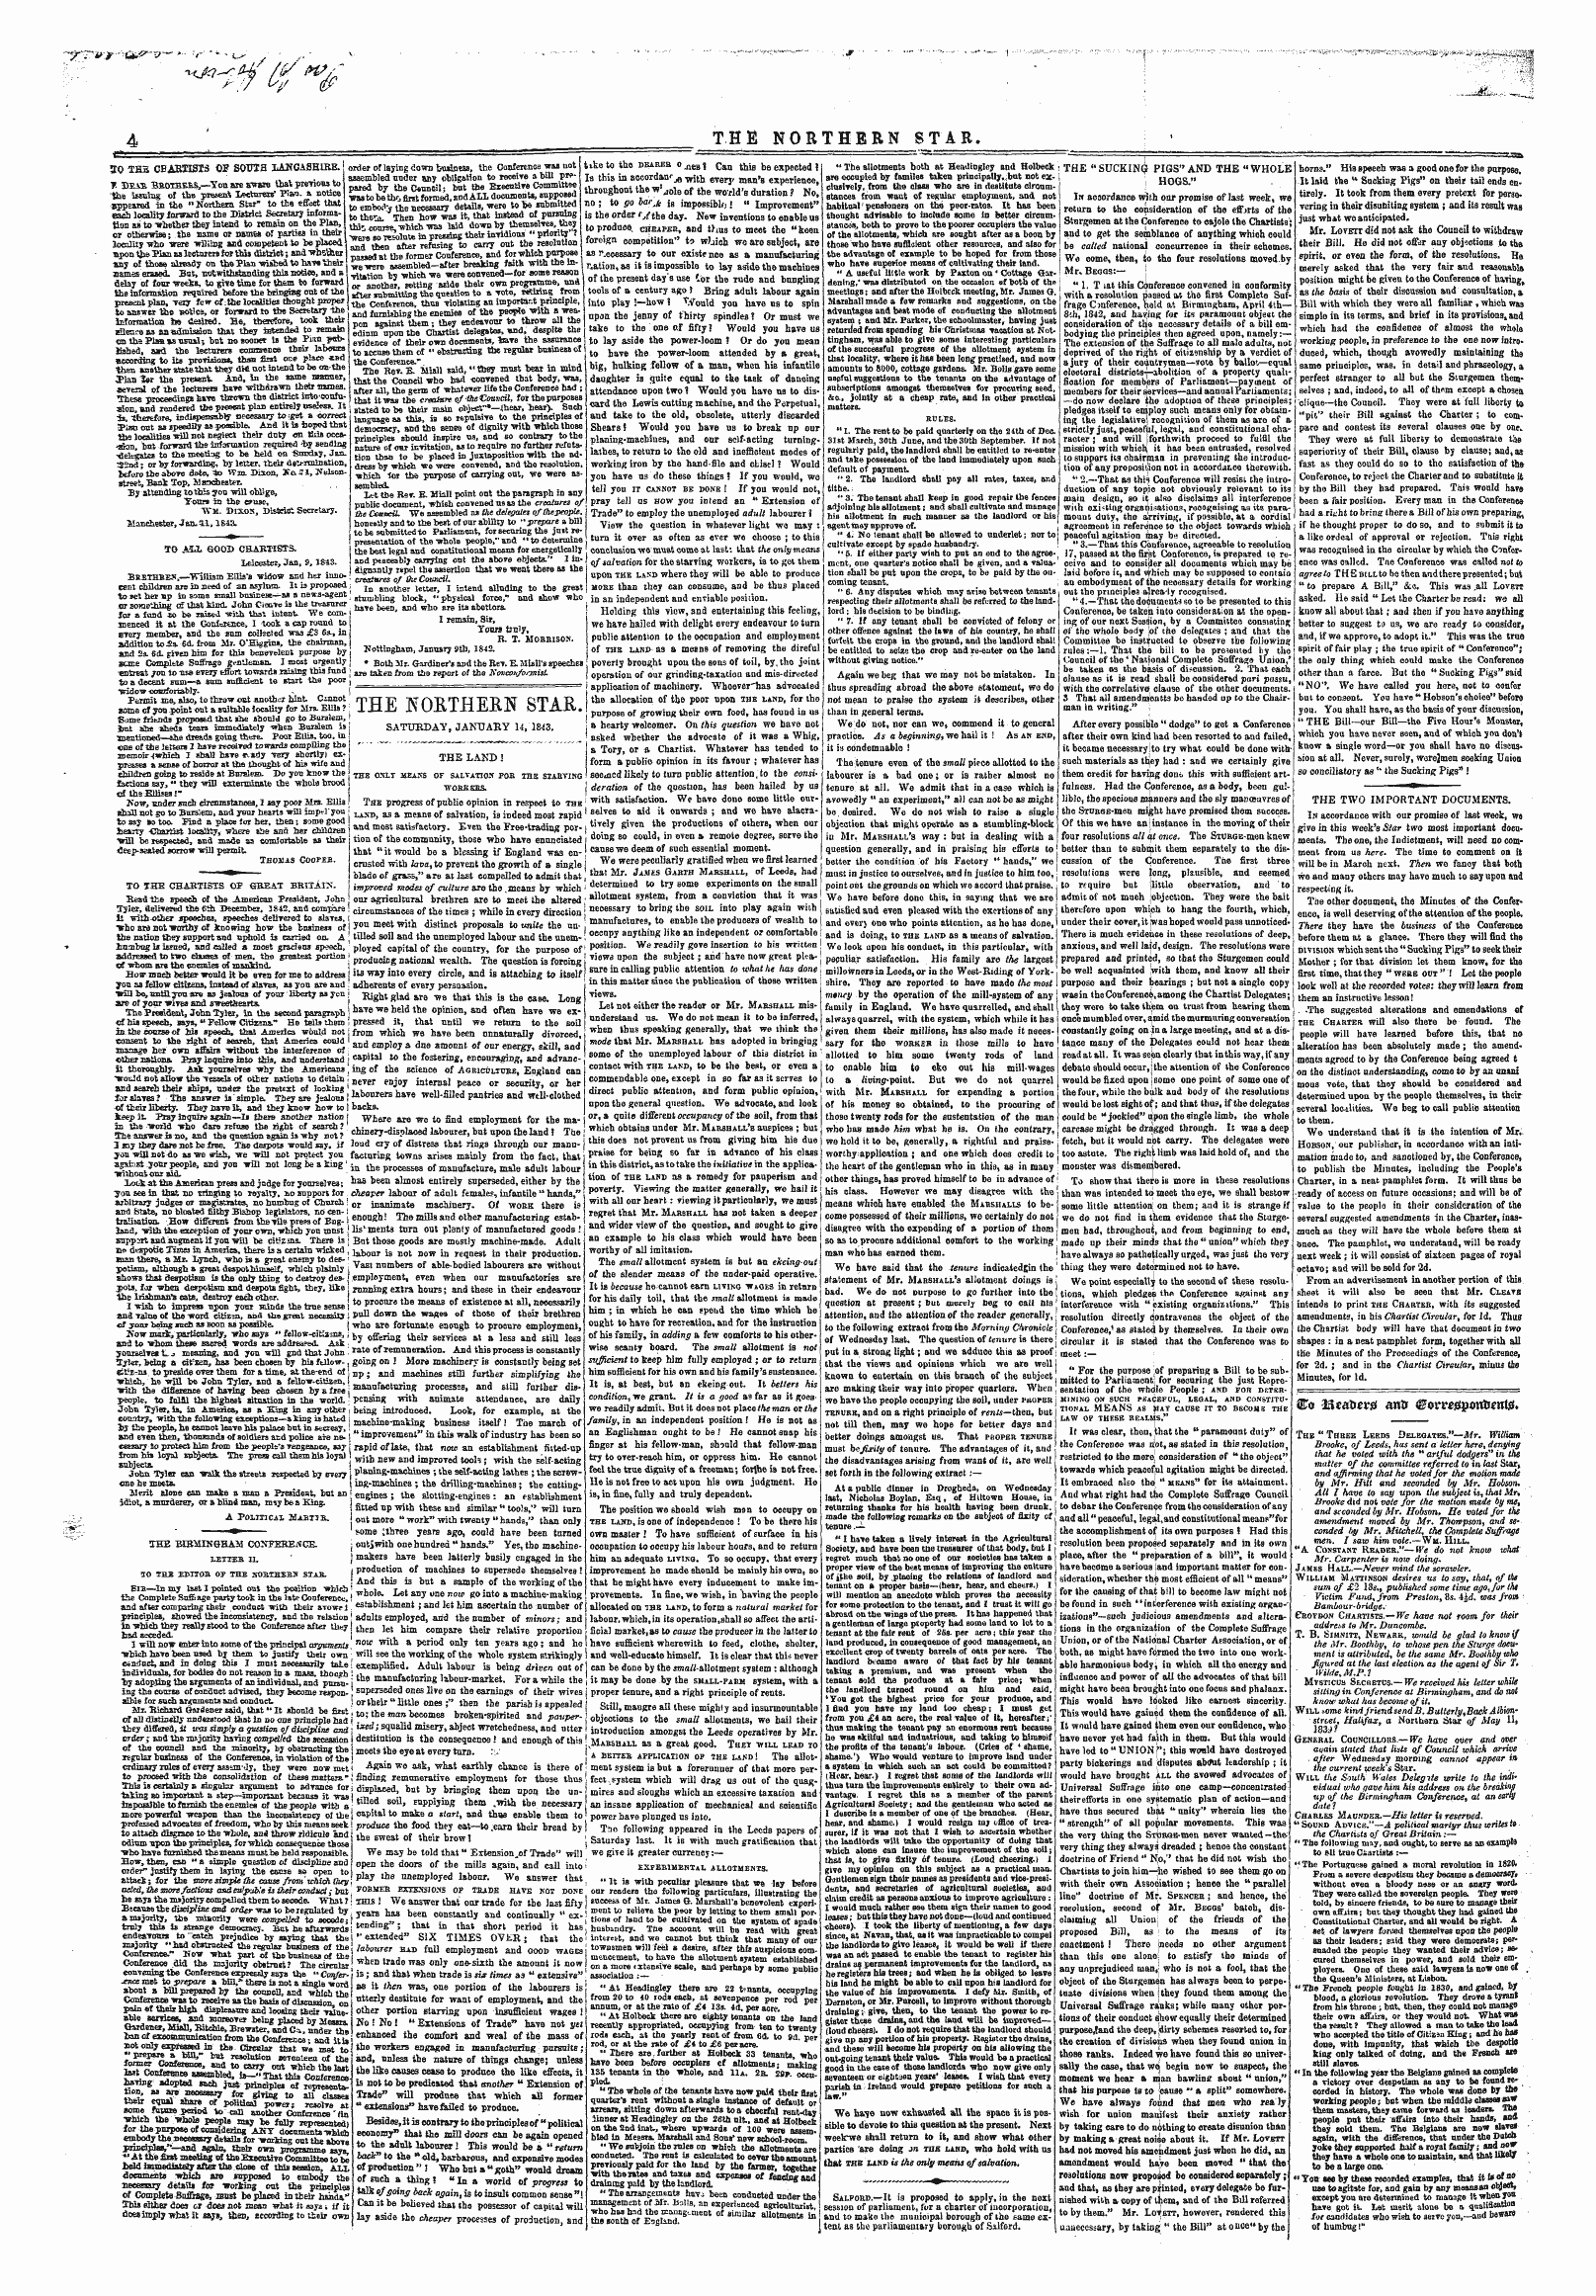 Northern Star (1837-1852): jS F Y, 4th edition - The Noethebu Star Saturday, January 14,1843.